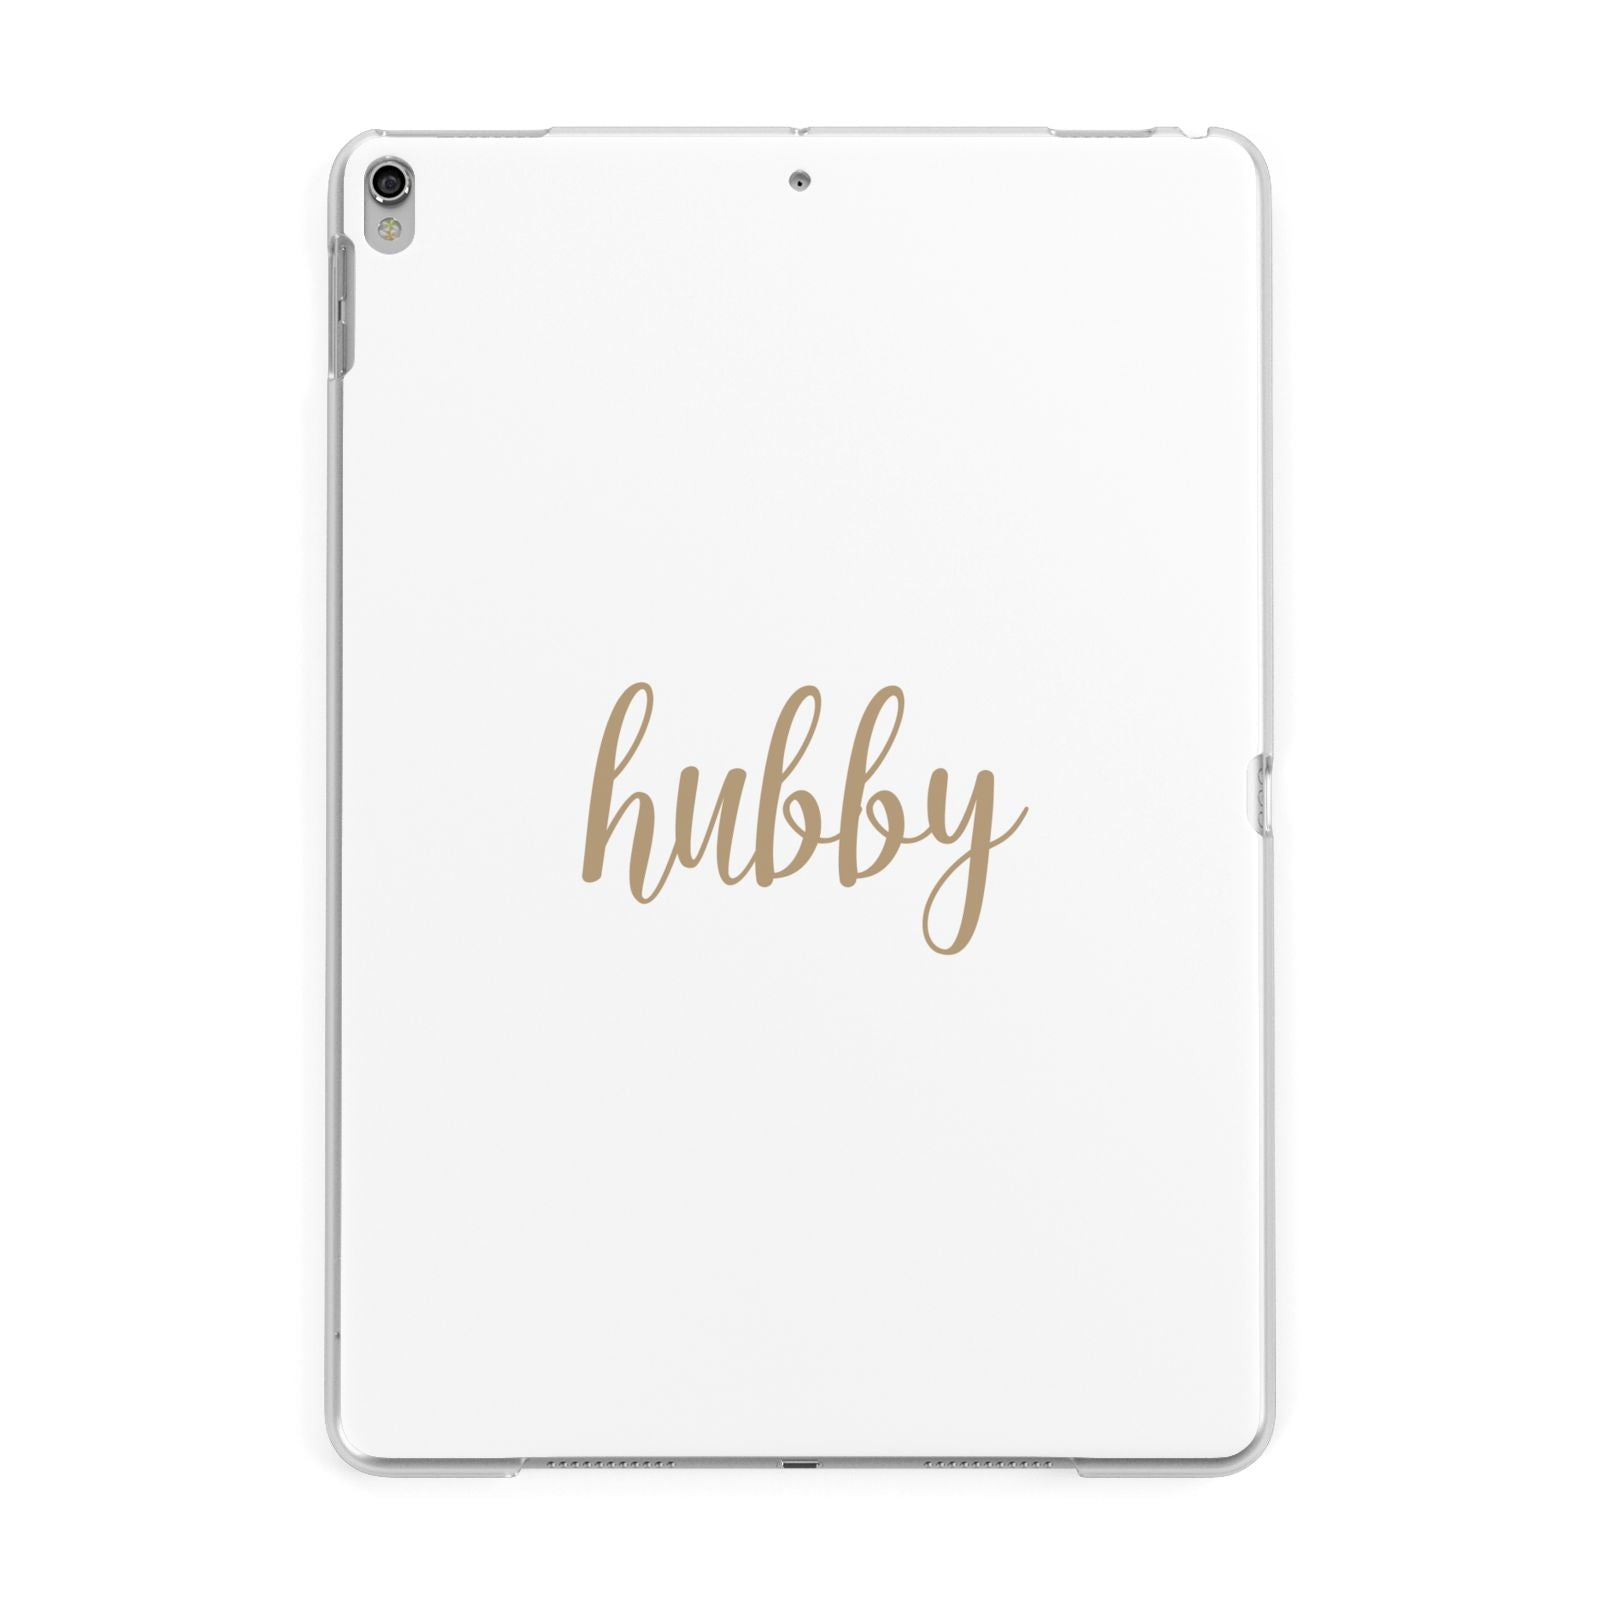 Hubby Apple iPad Silver Case